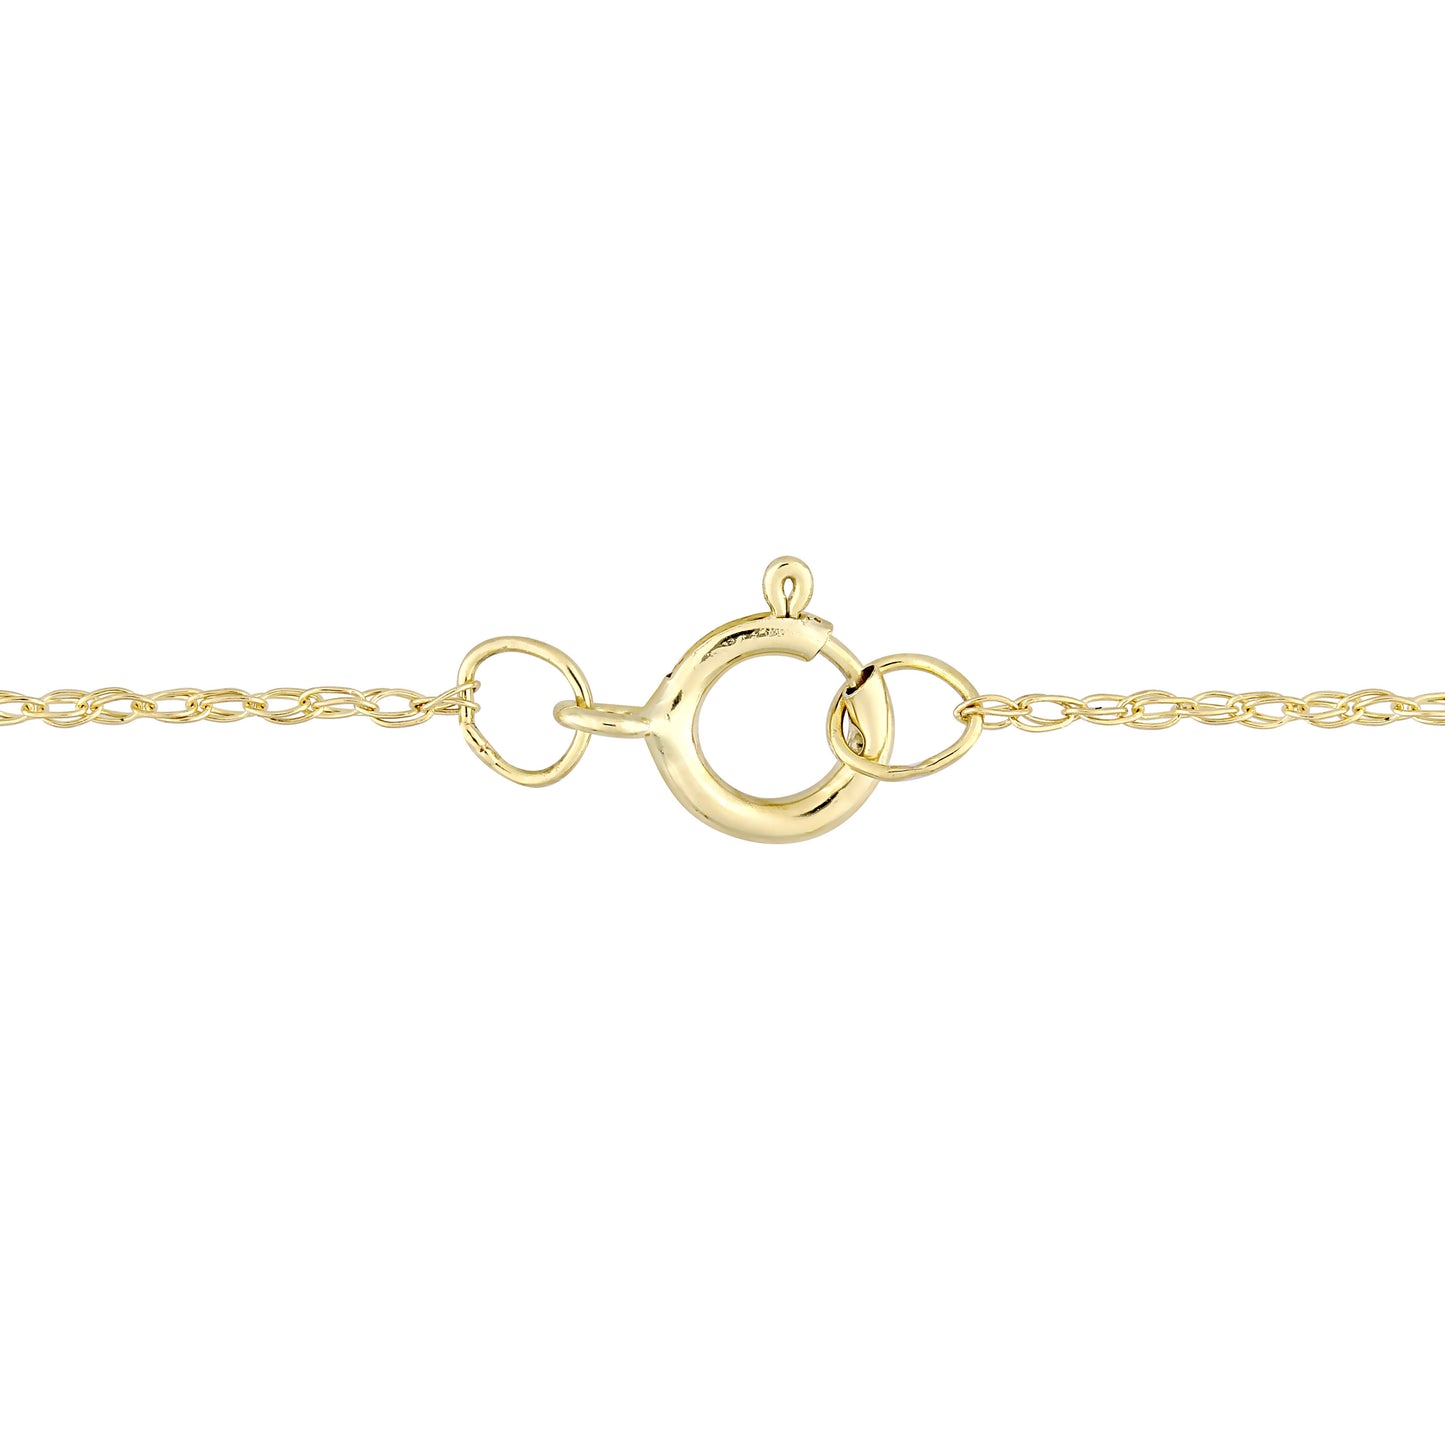 Garnet & Diamond Swirl Necklace in 10k Yellow Gold